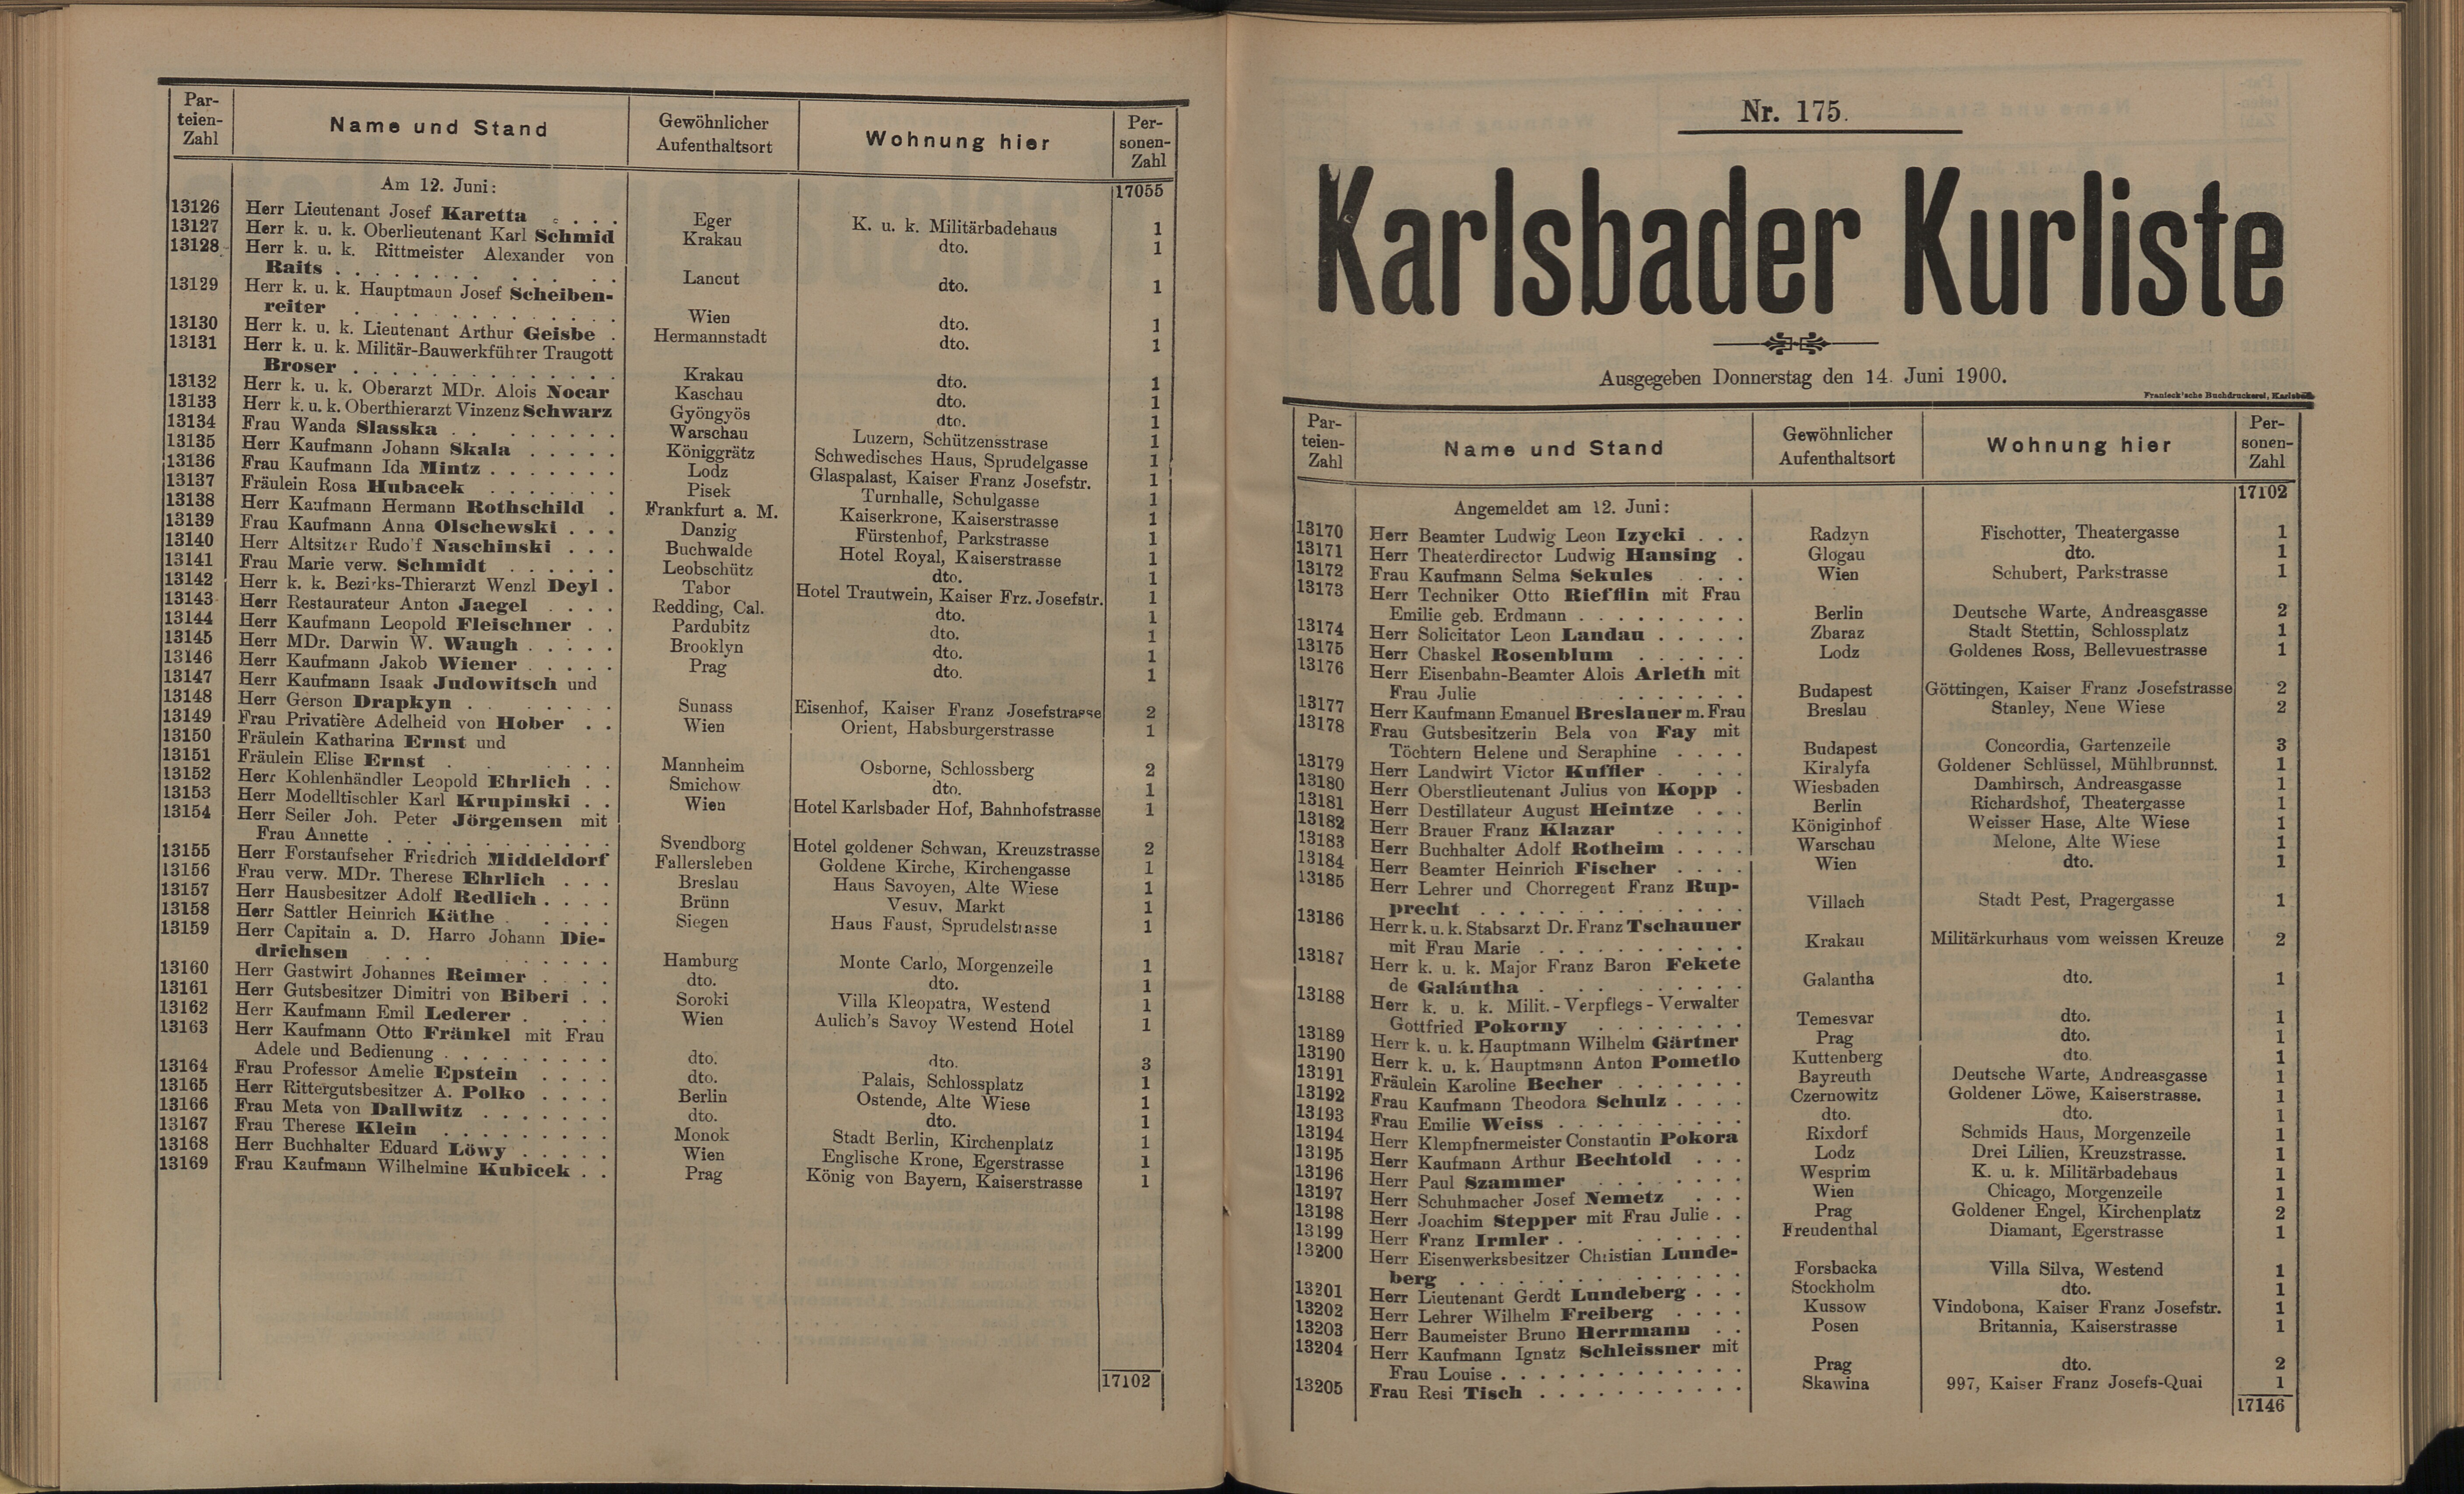 195. soap-kv_knihovna_karlsbader-kurliste-1900_1960